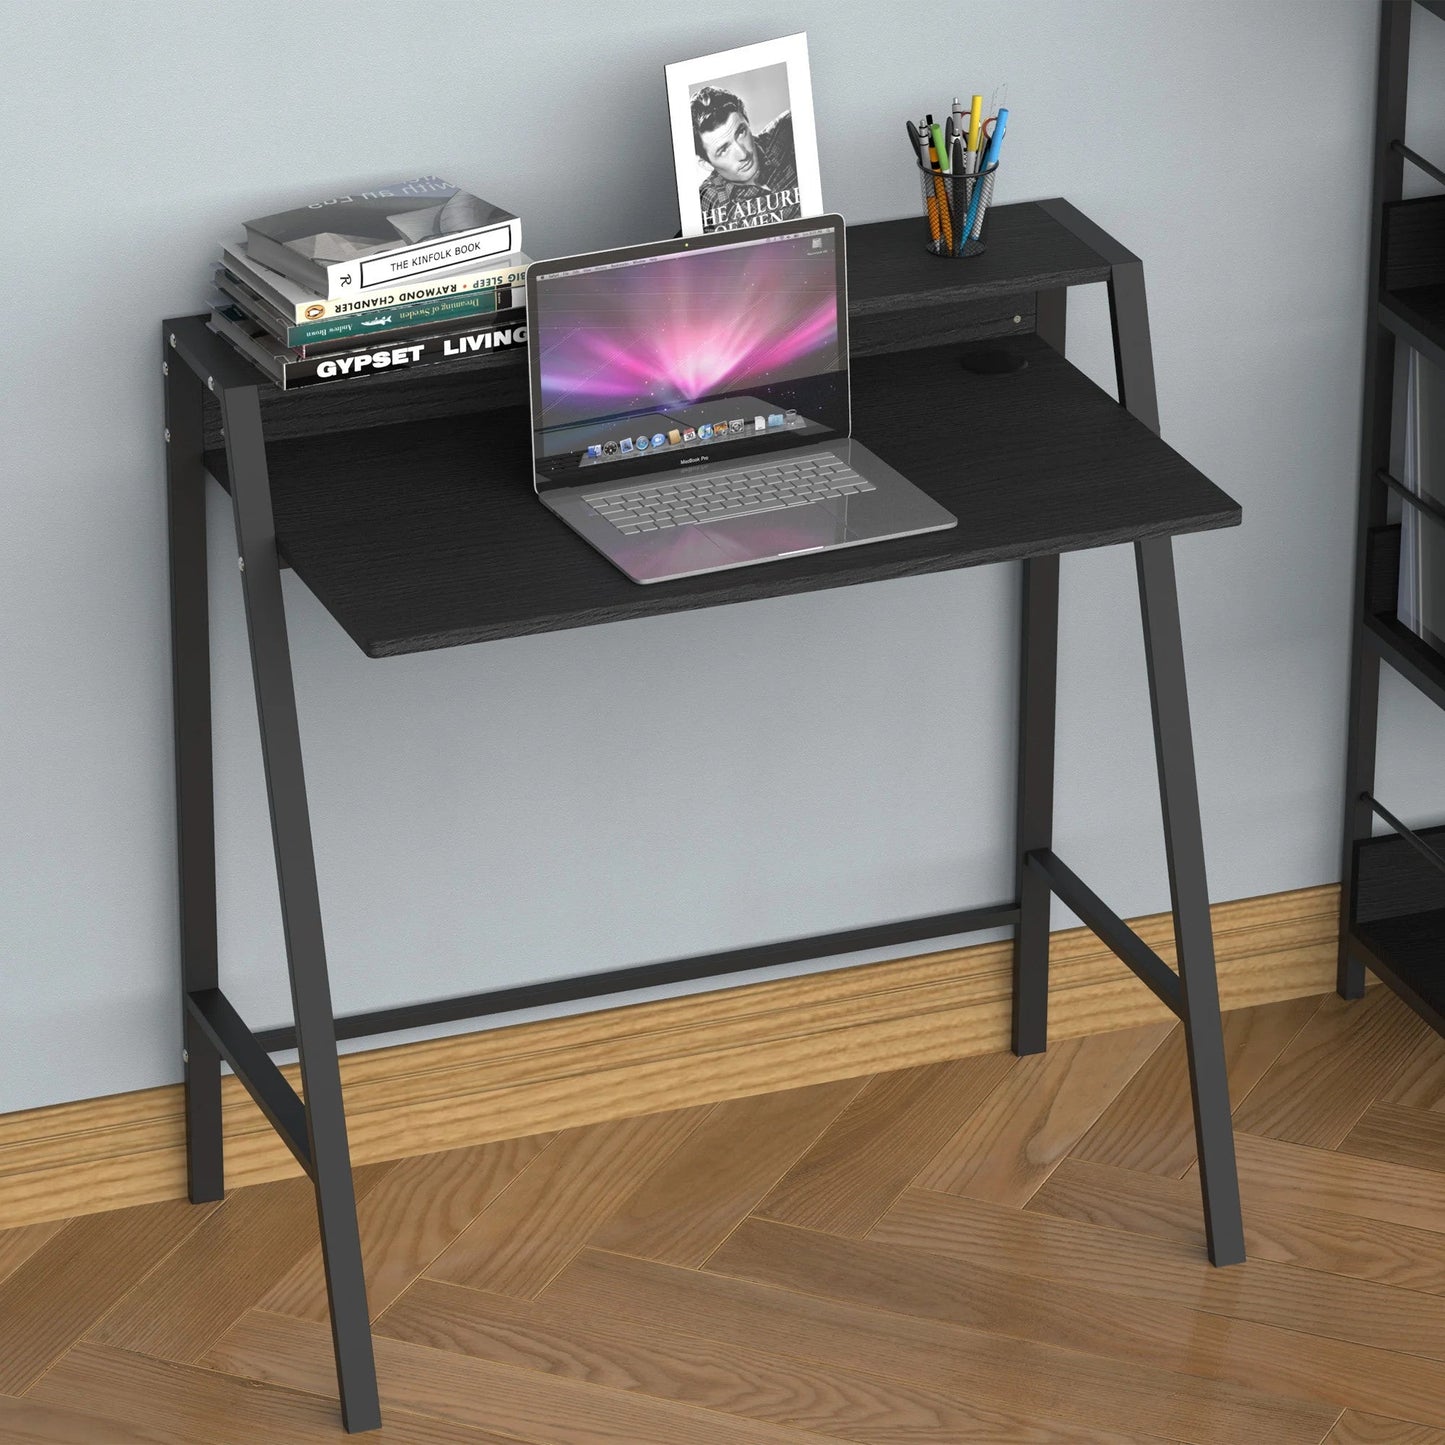 ProperAV Extra Computer Desk with Elevated Storage Shelf - maplin.co.uk